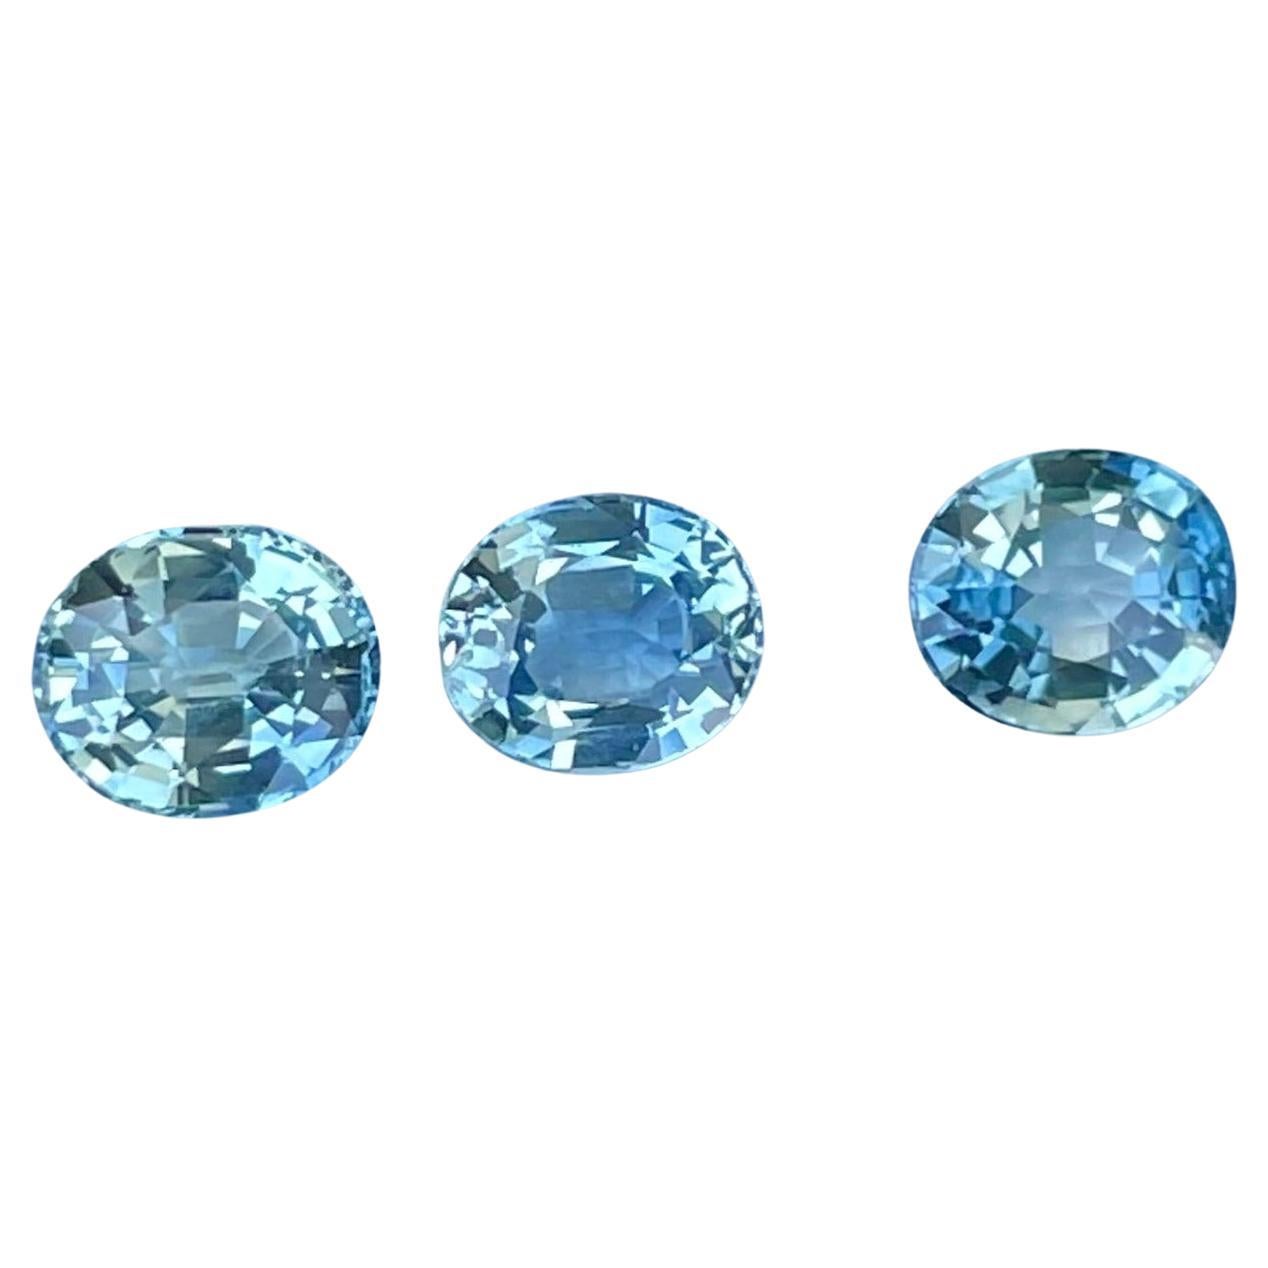 3.55 carats Blue Oval Cut Loose Sapphire Natural Gemstones Set from Sri Lanka en vente